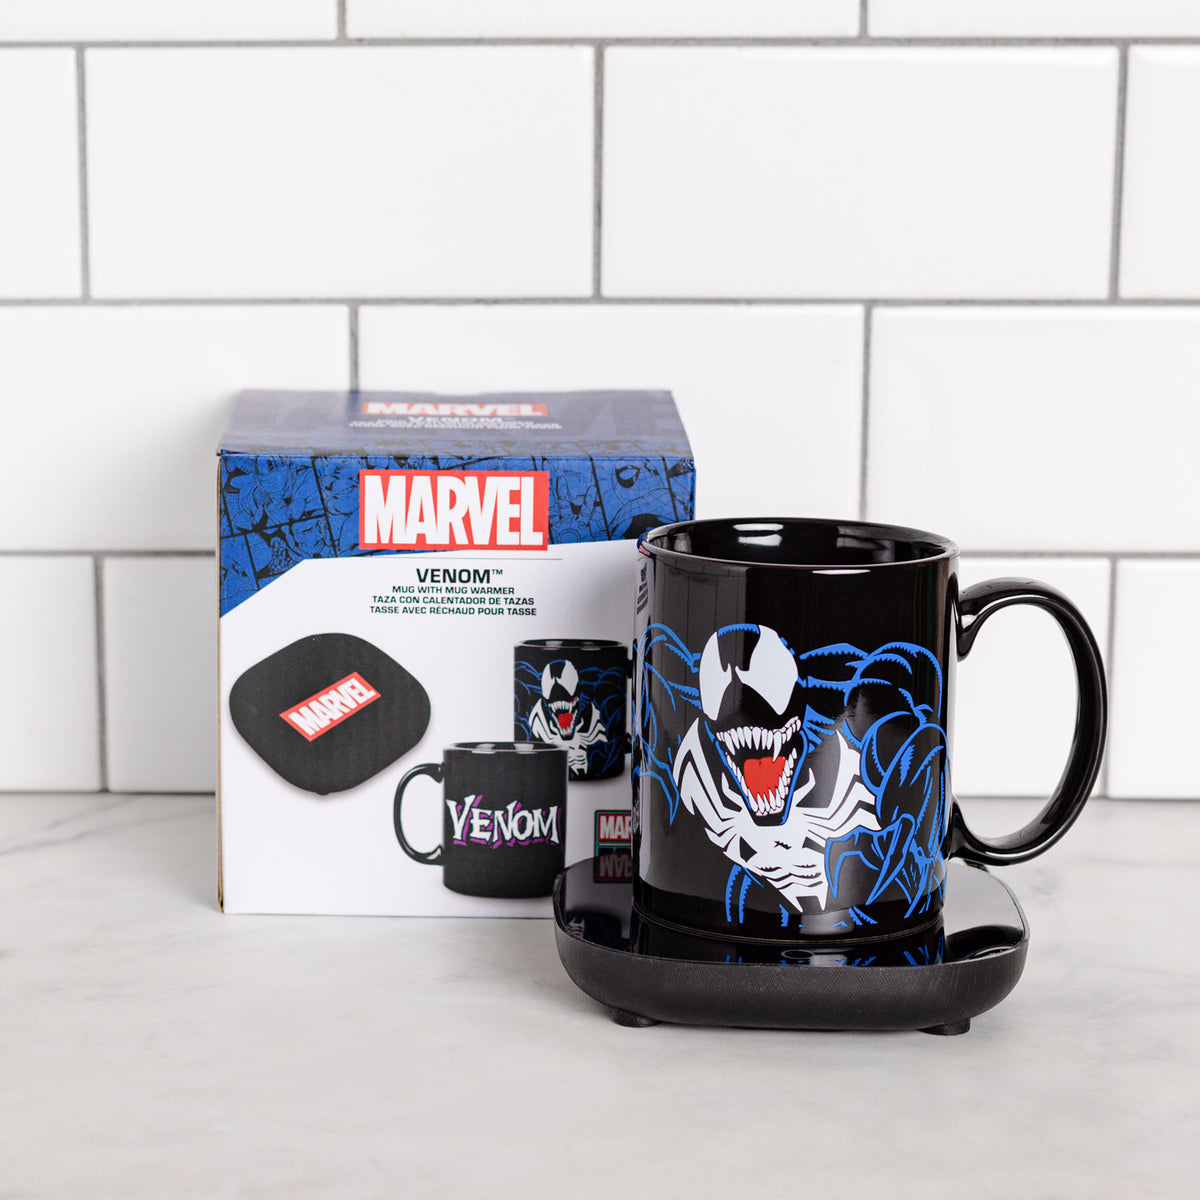 Marvel Venom 12oz Mug Warmer Set